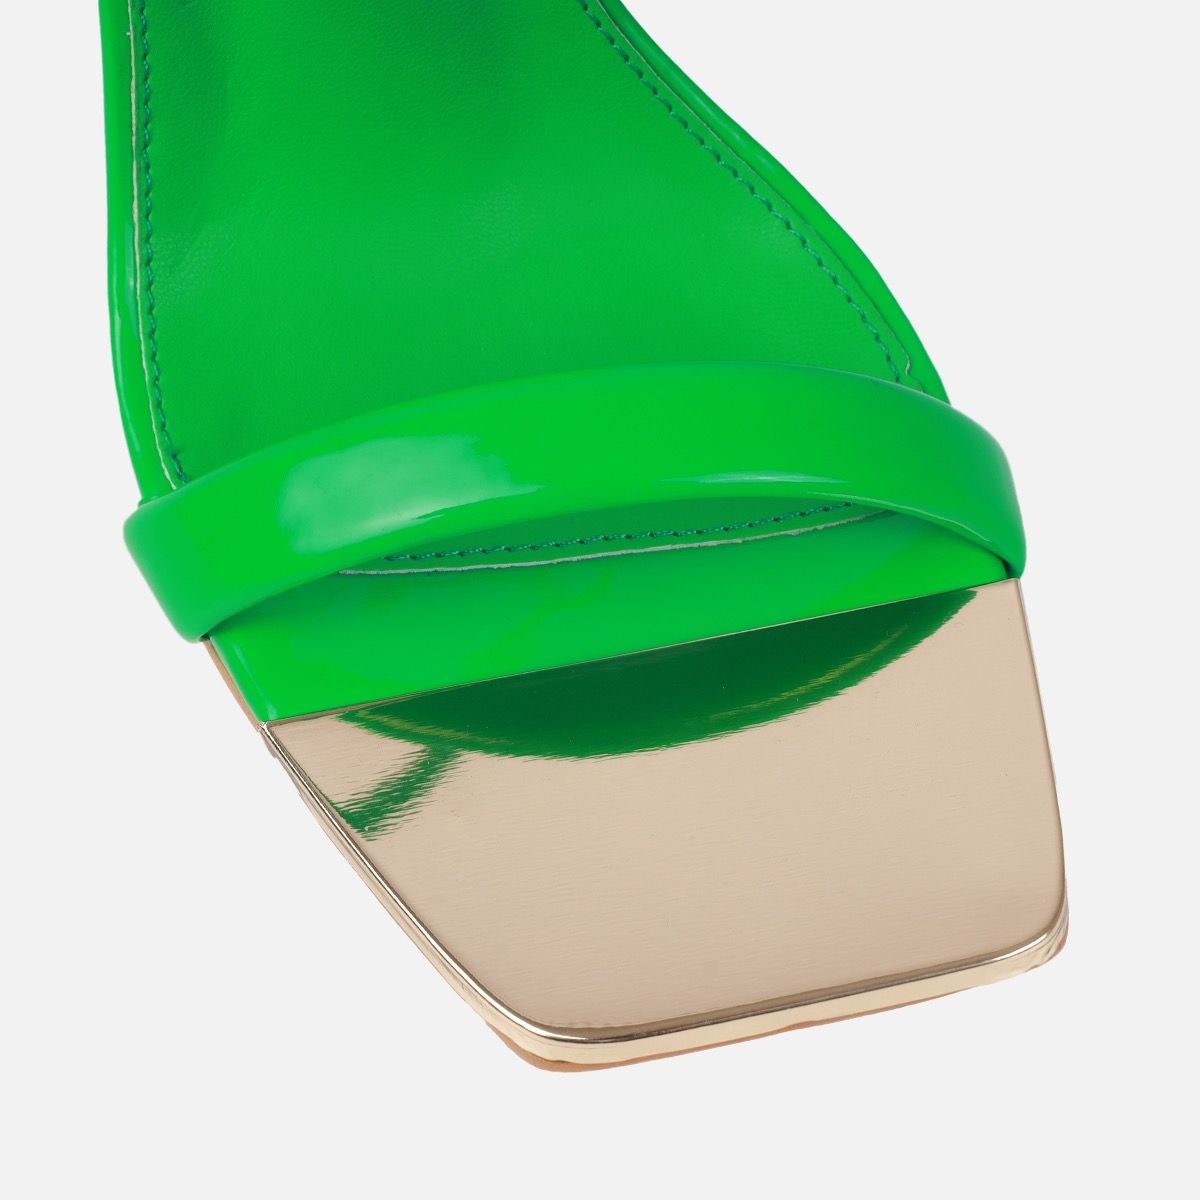 Nuris Green Patent Lace Up Heels| SIMMI London